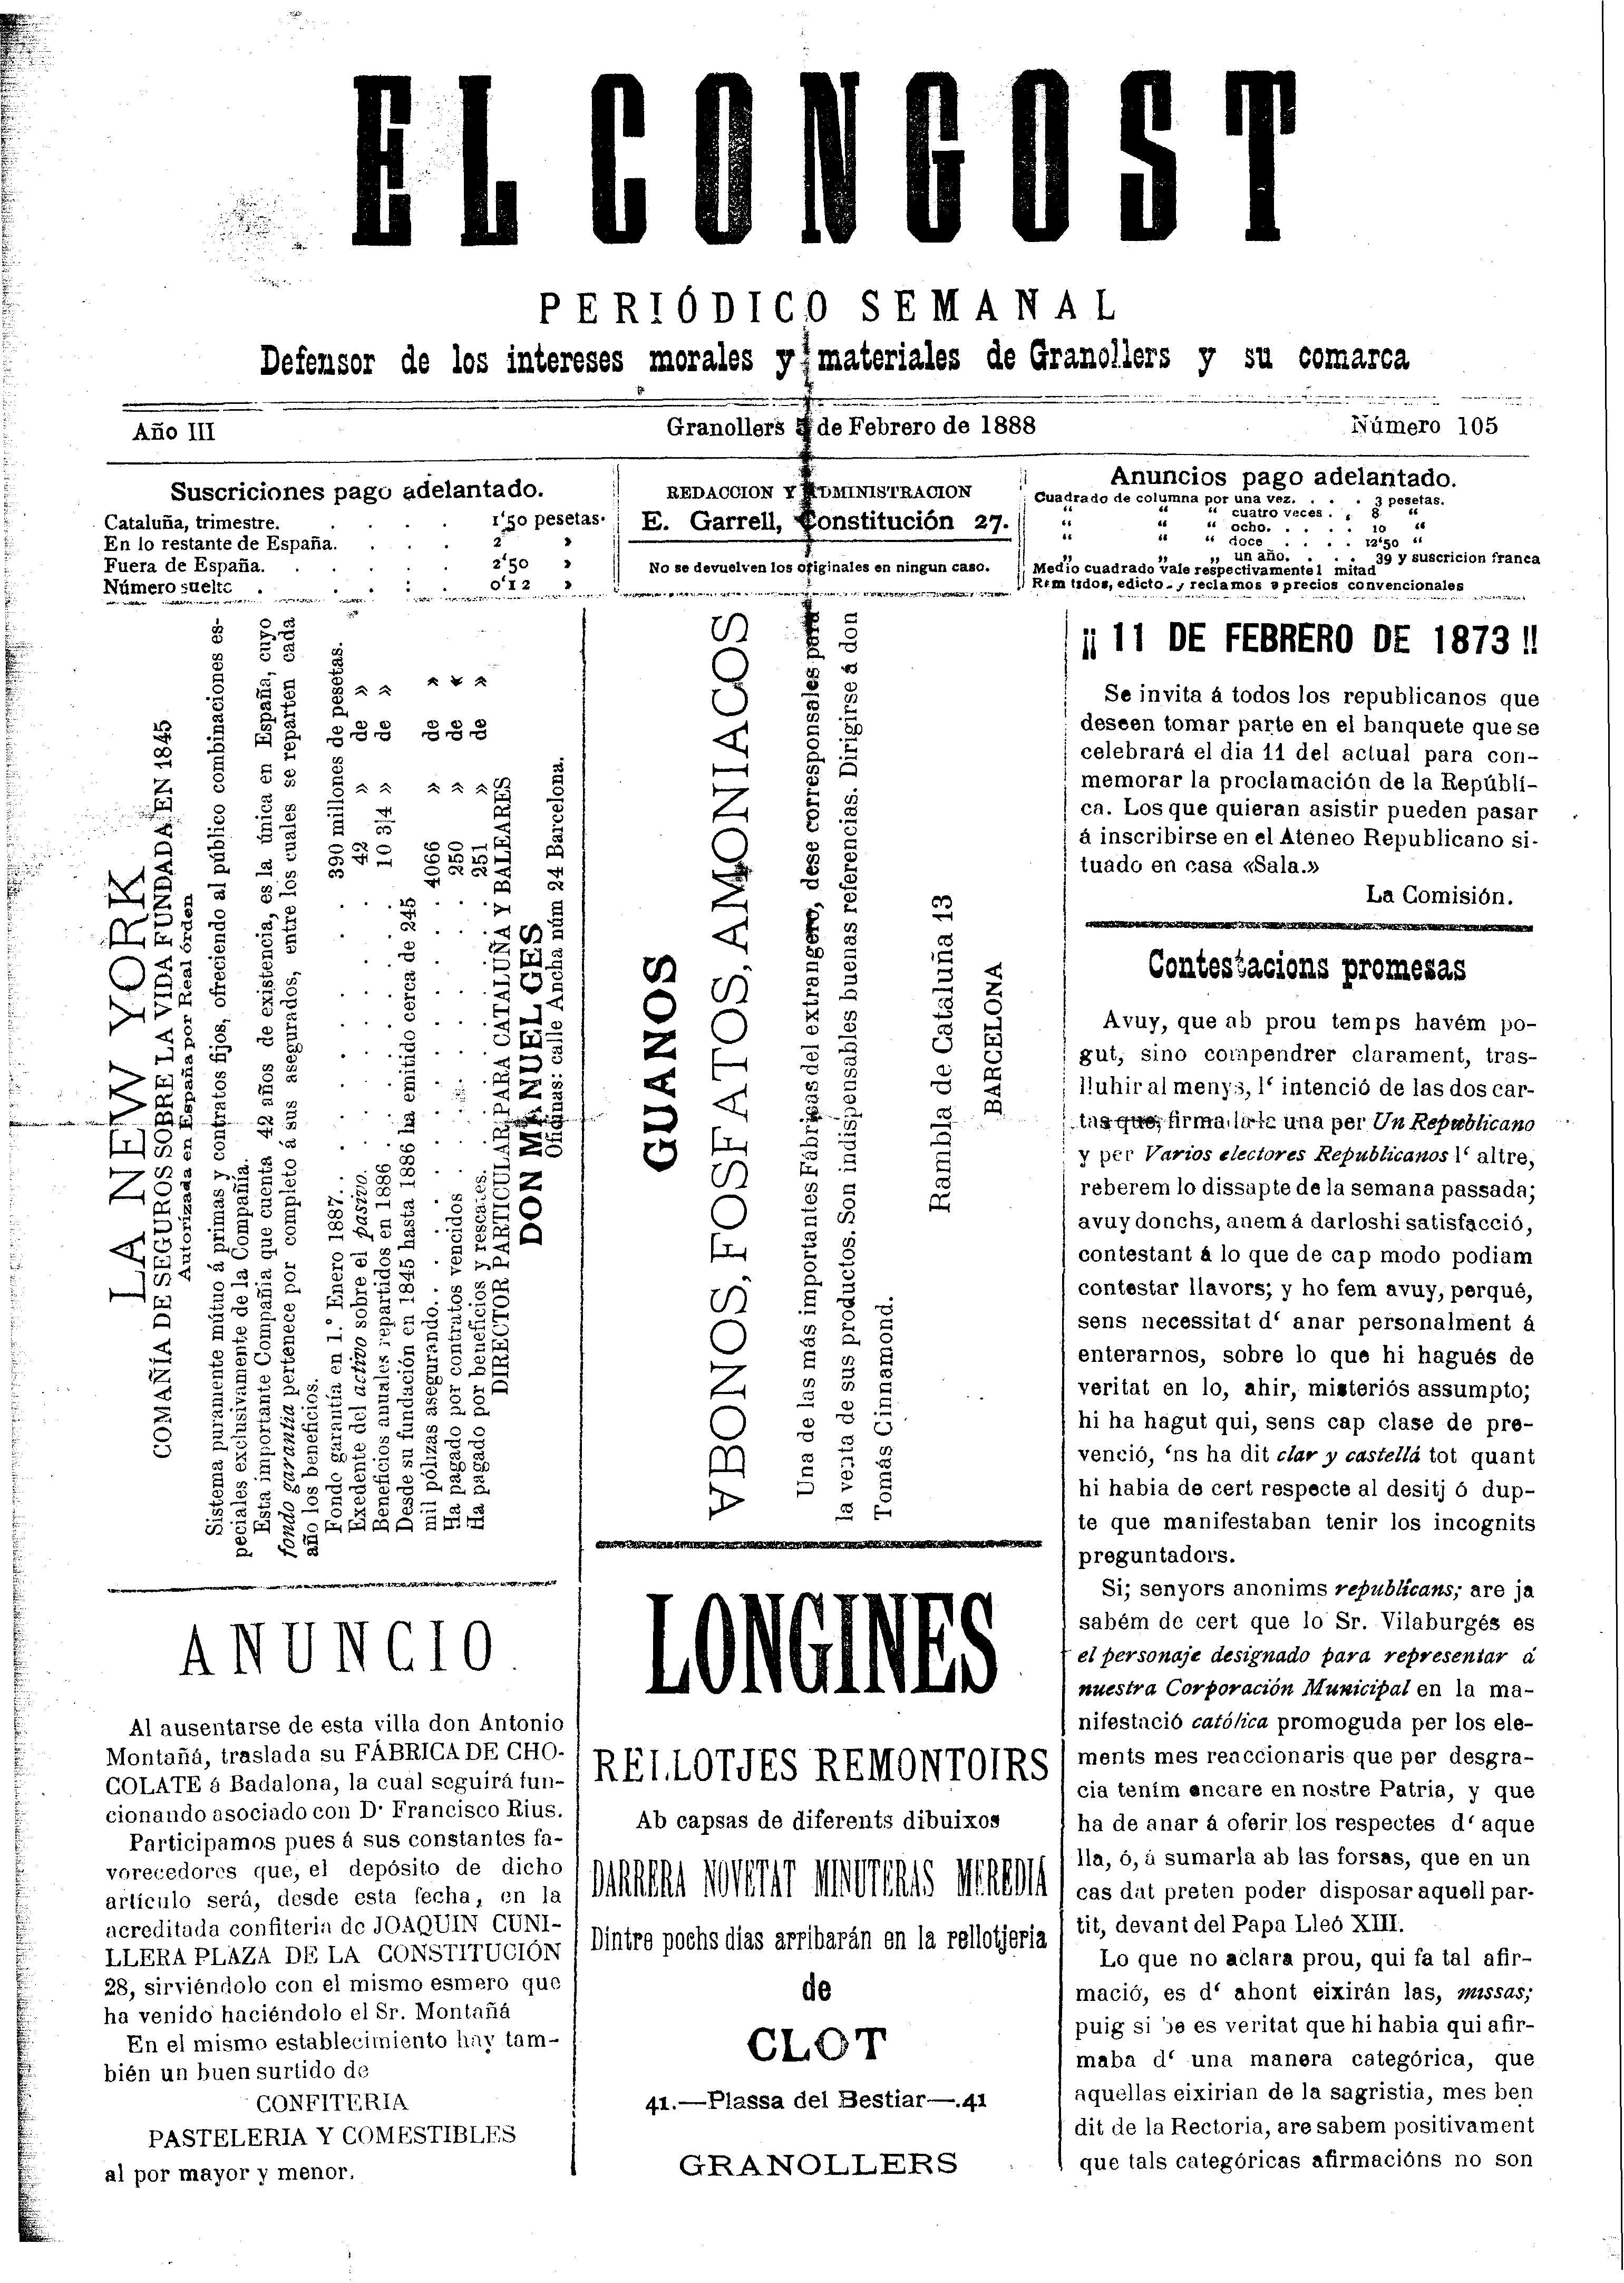 El Congost, 5/2/1888 [Exemplar]